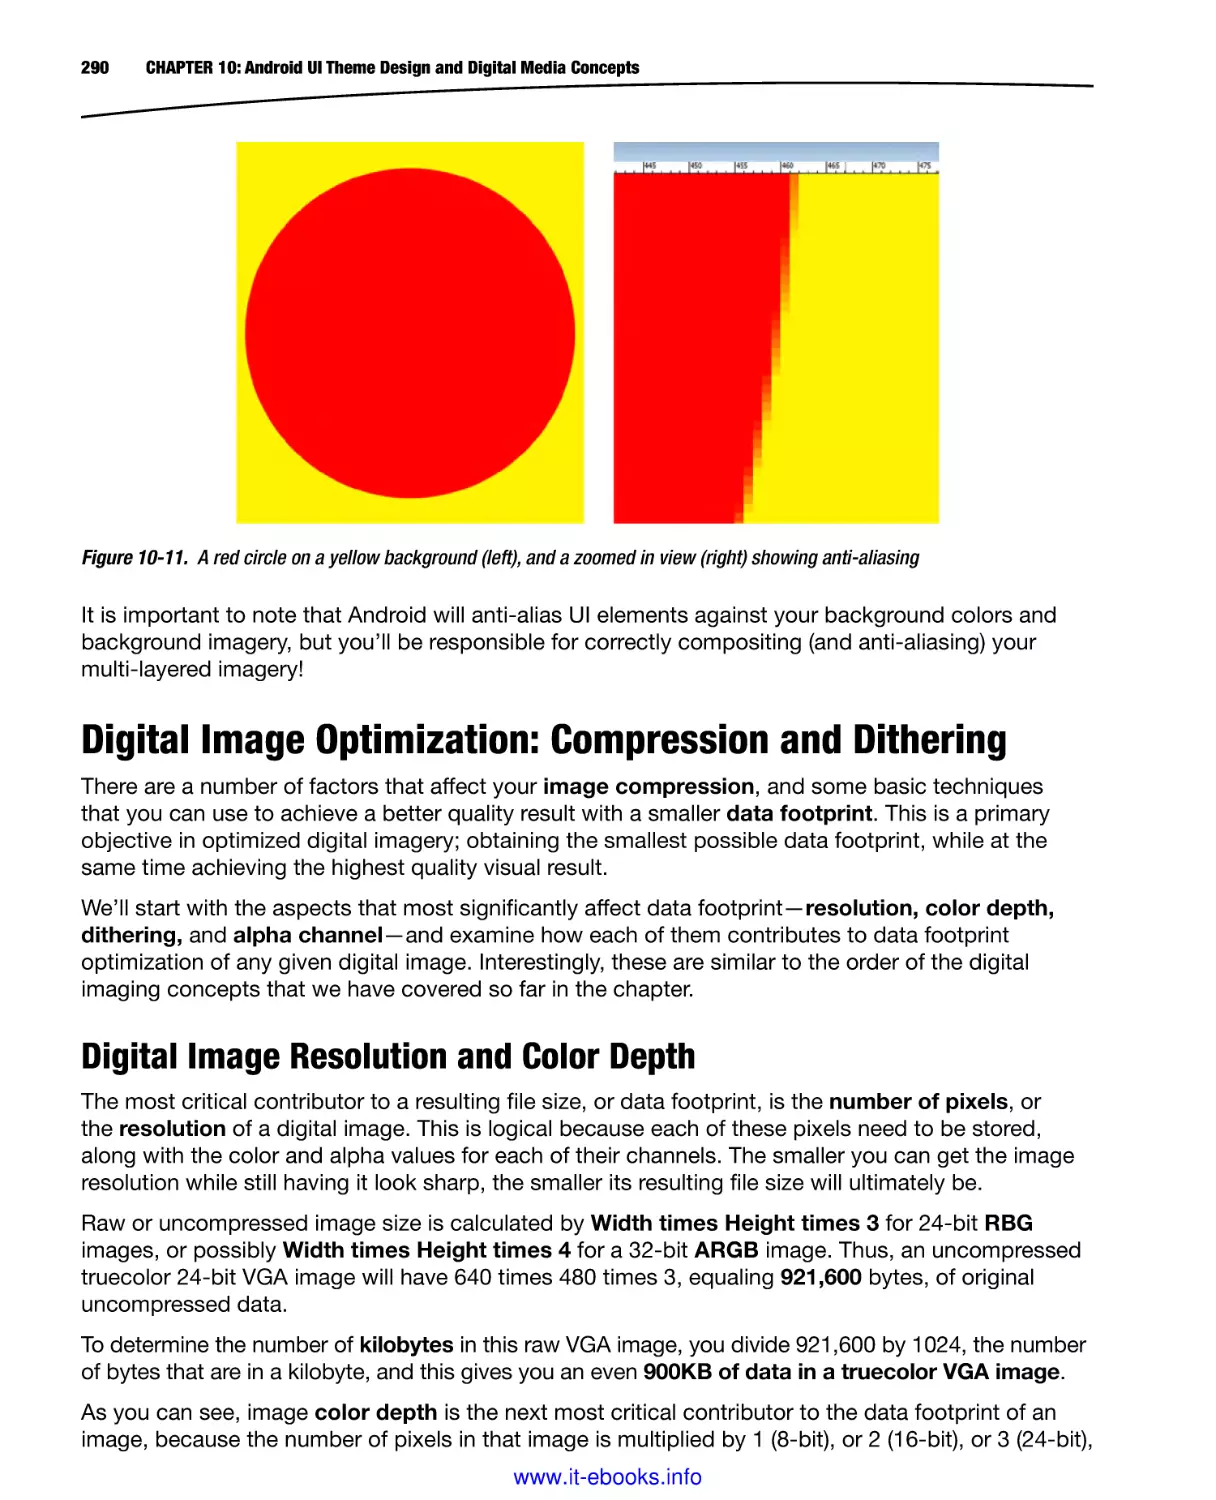 Digital Image Optimization